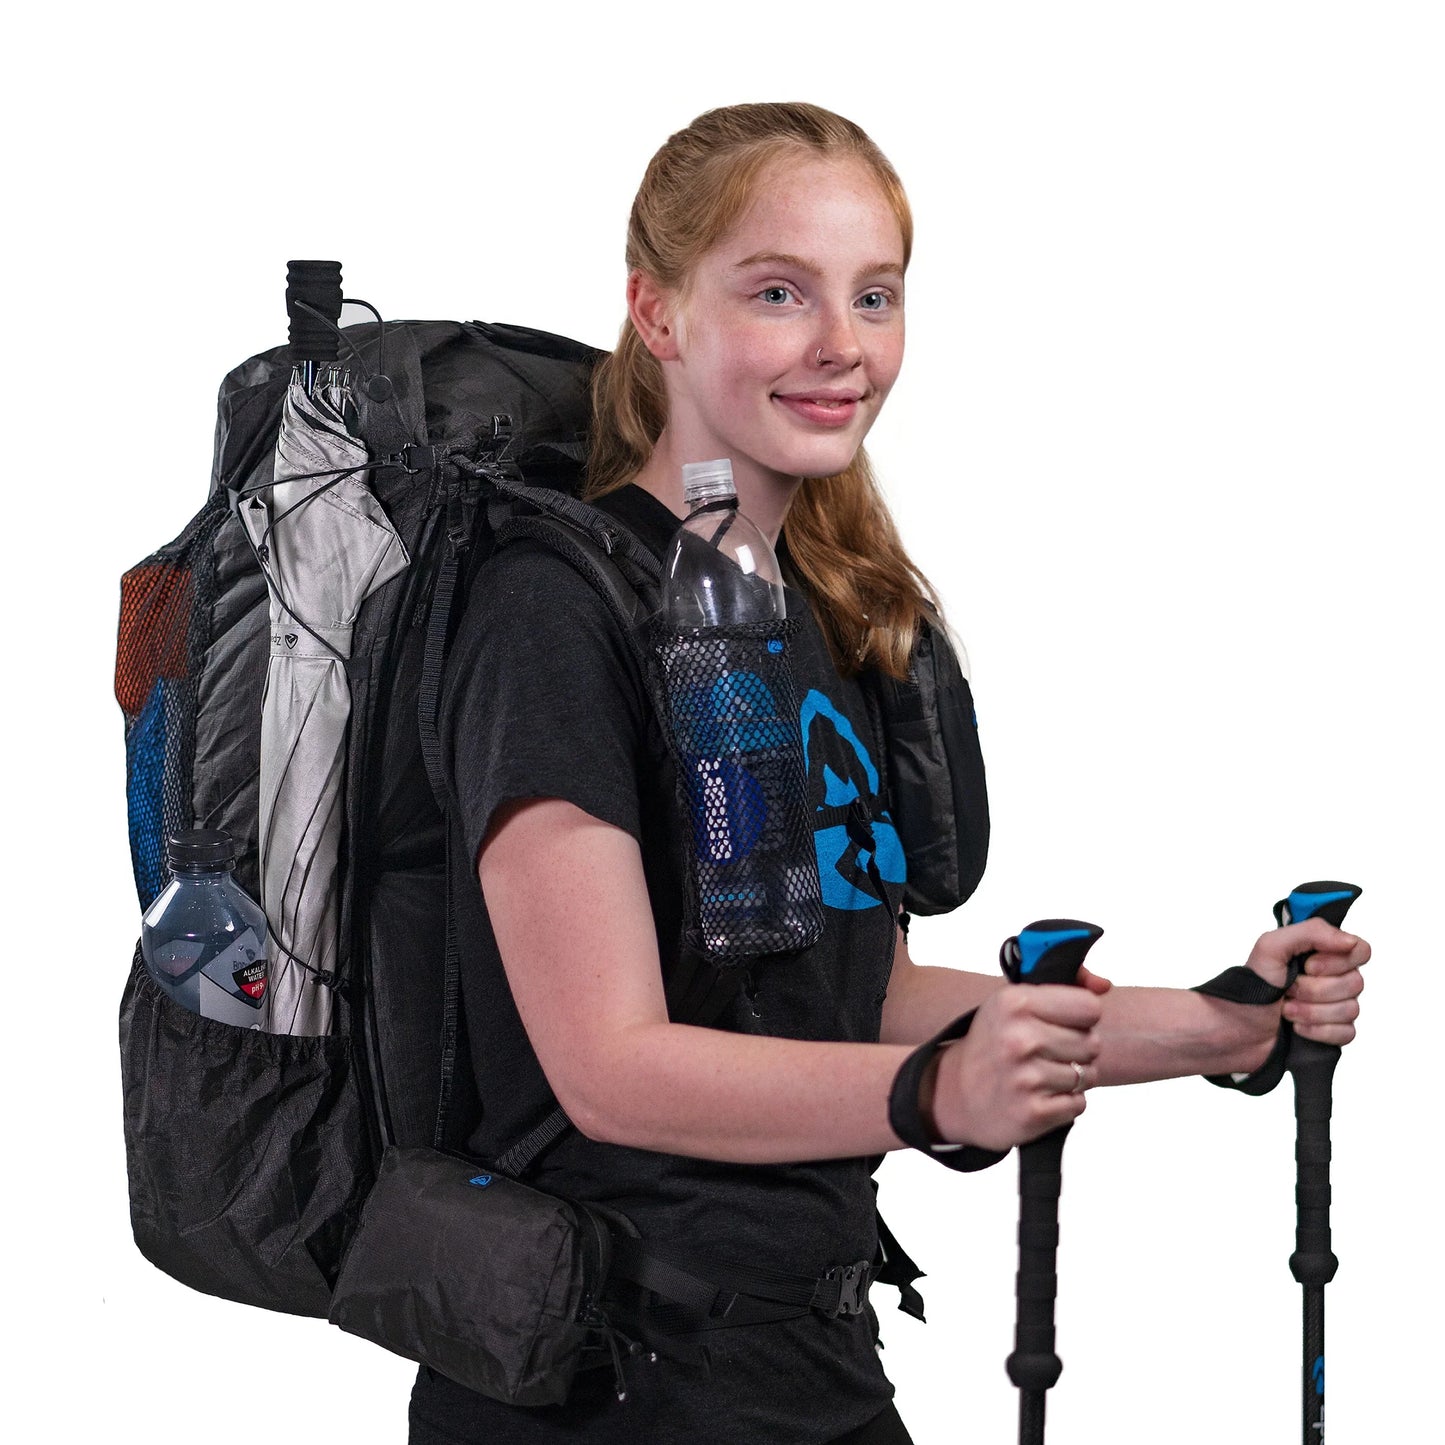 Zpacks - Arc Haul Ultra 50L Backpack